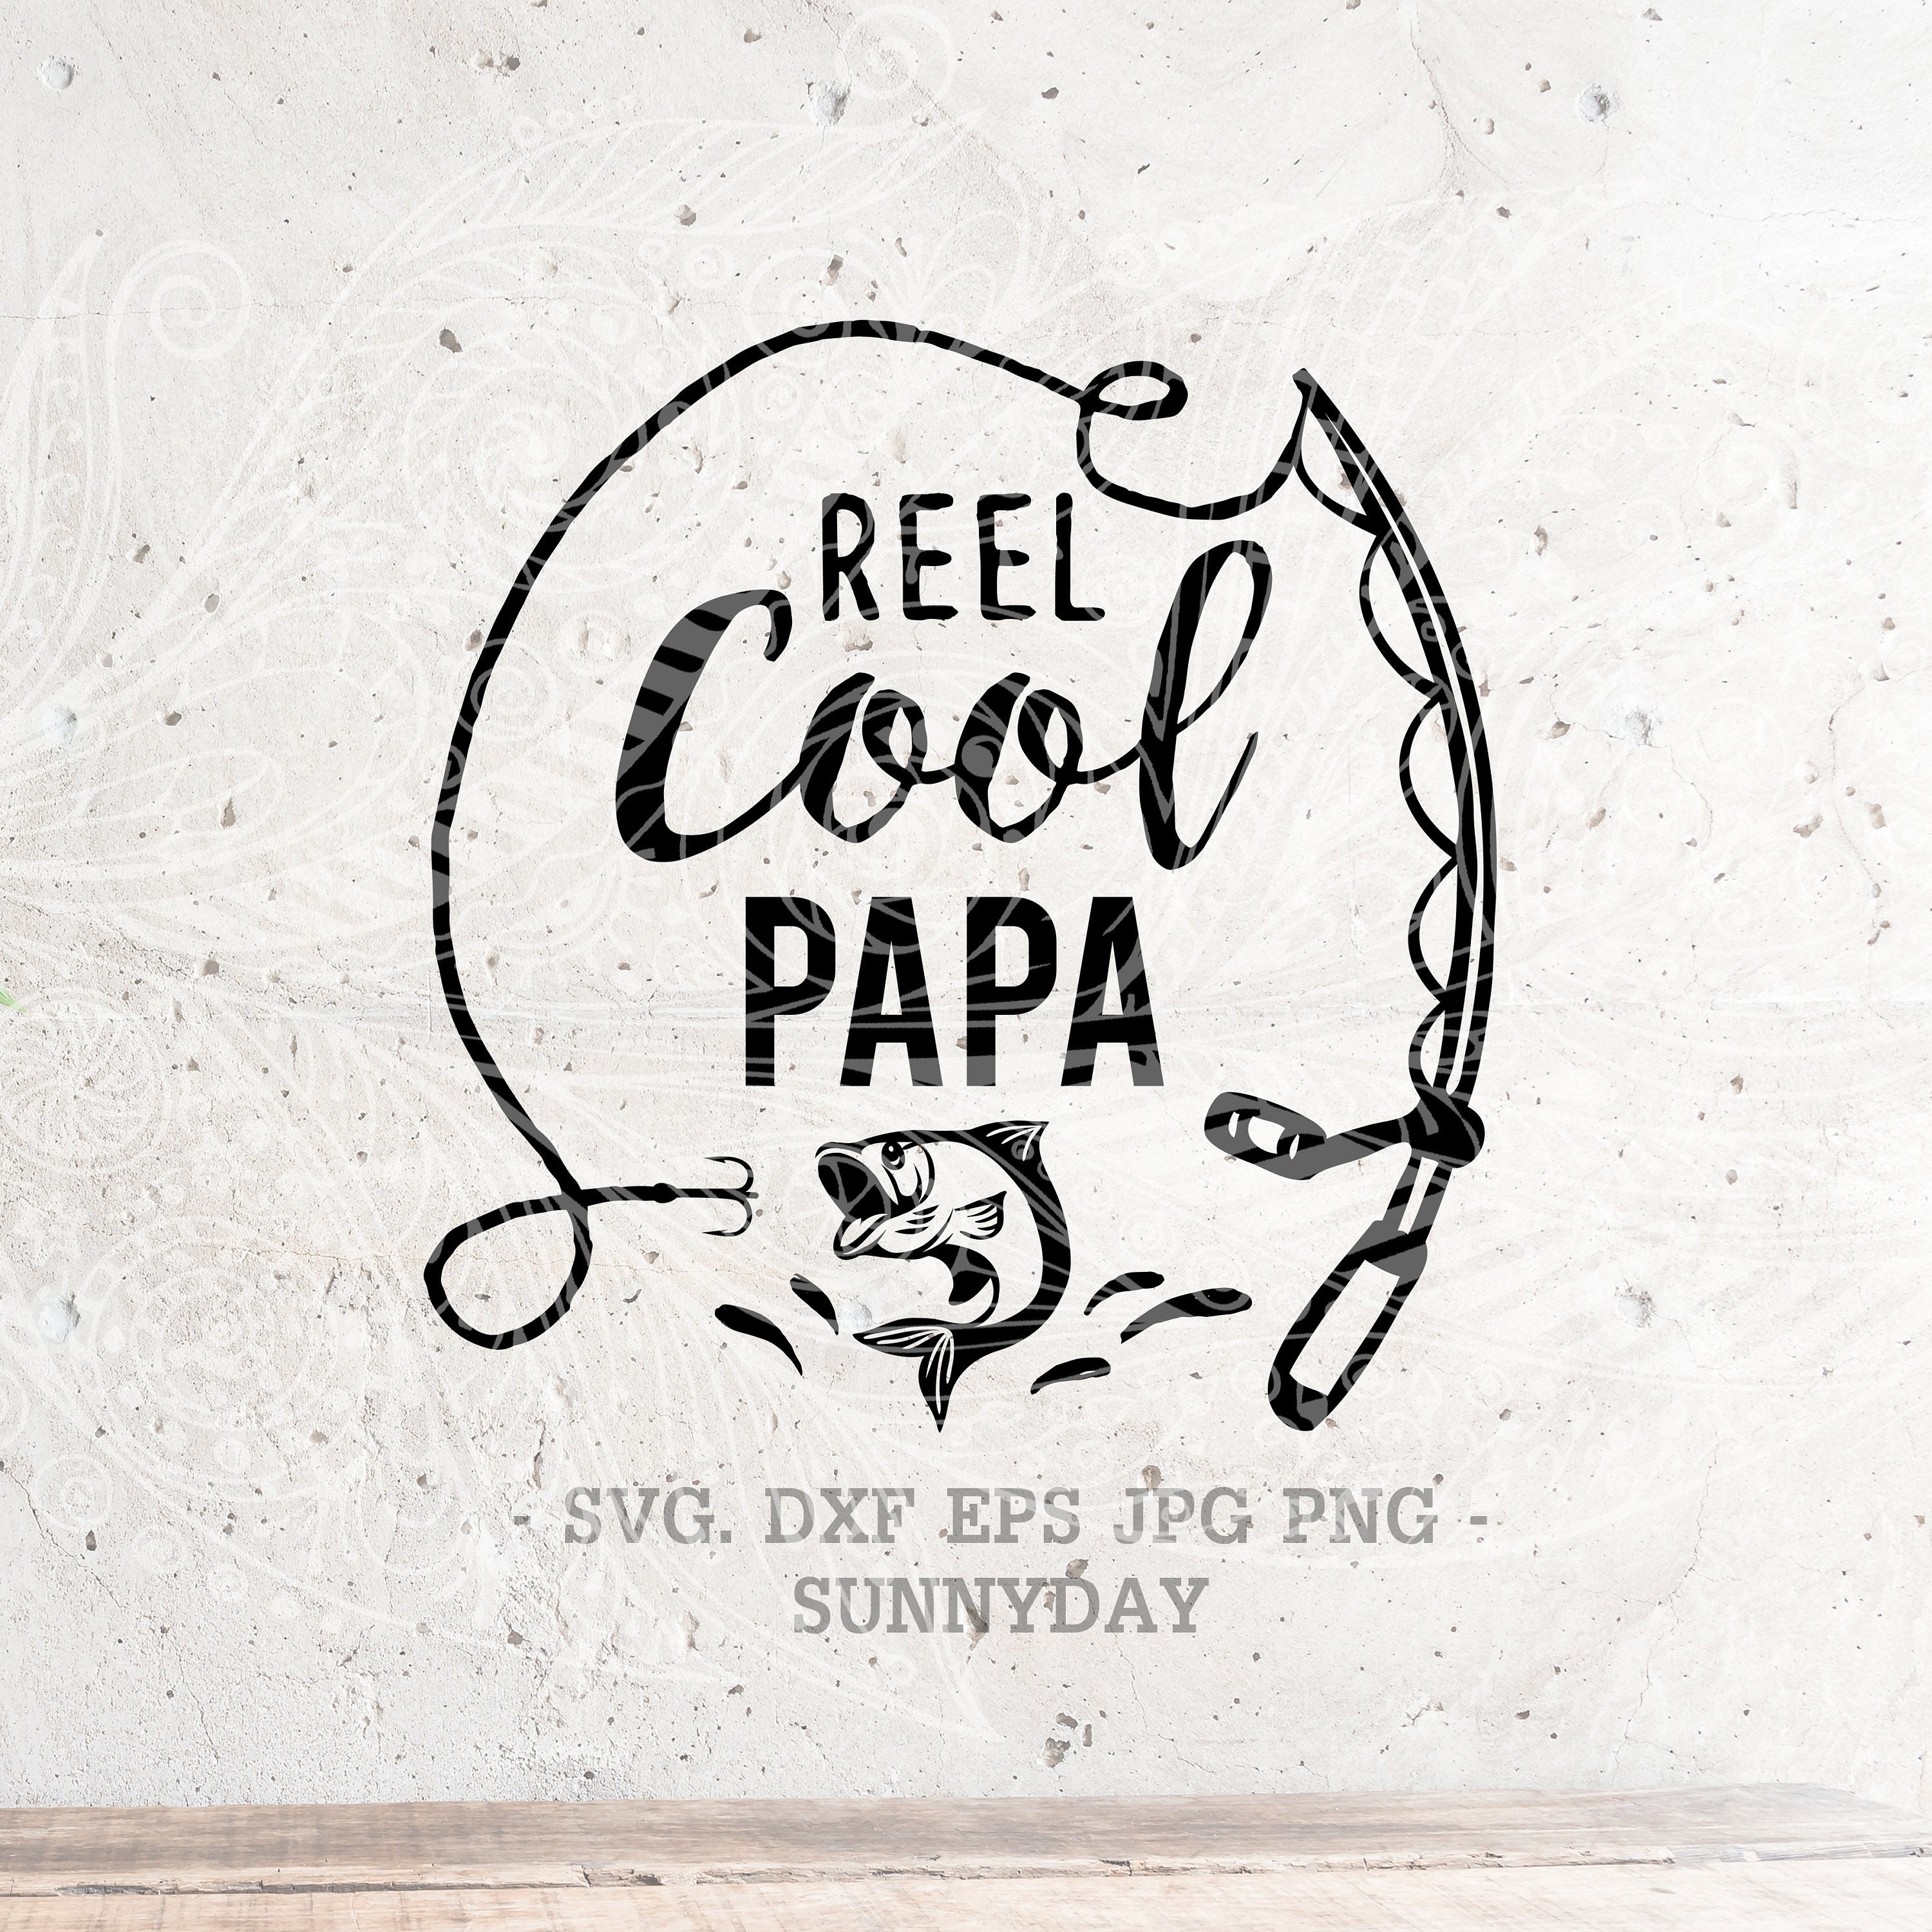 Reel Cool Papa -  Canada